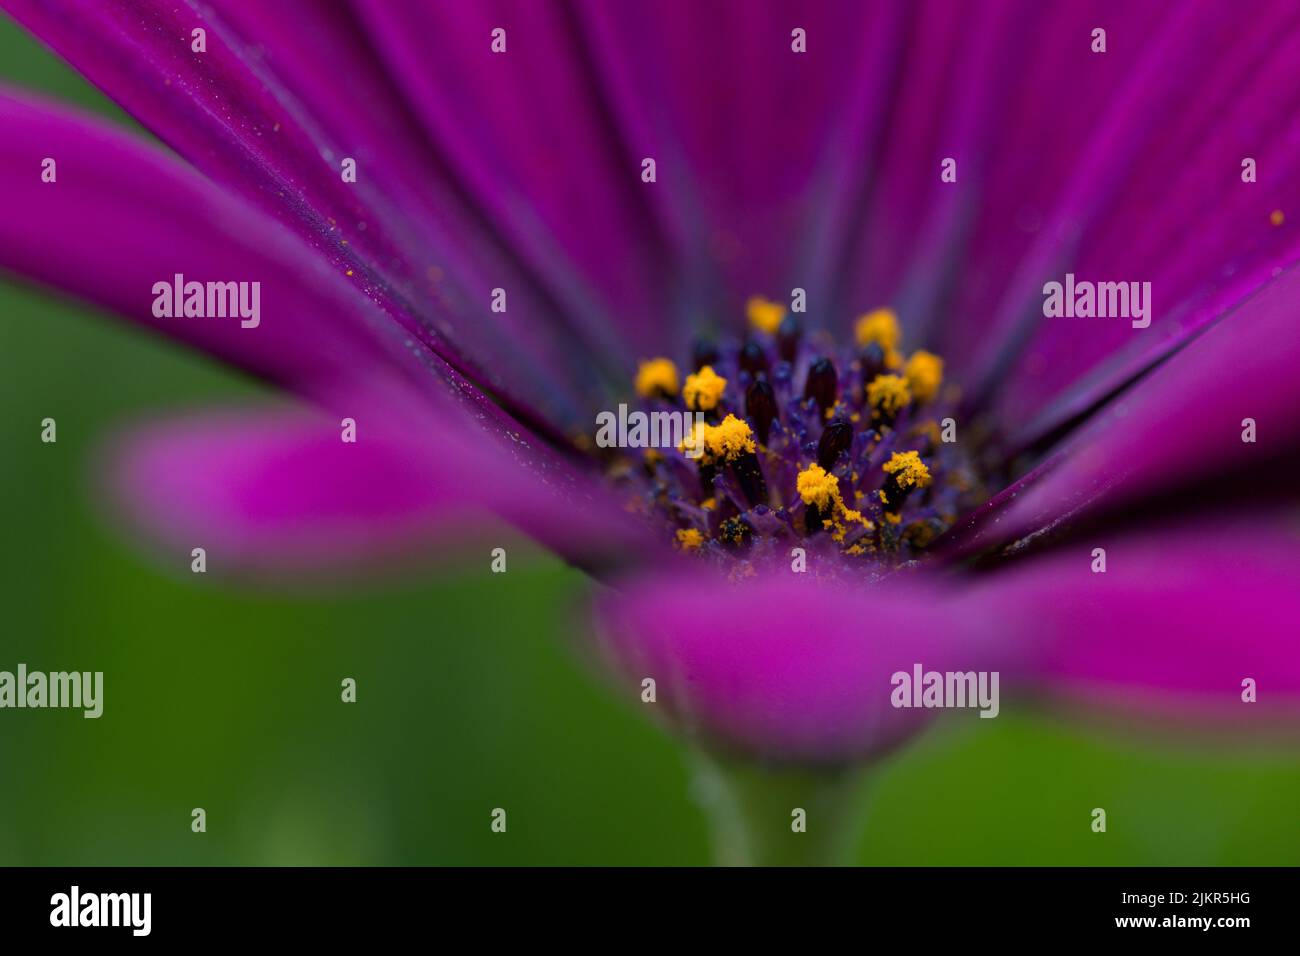 Purple blossom of a garden flower Stock Photo